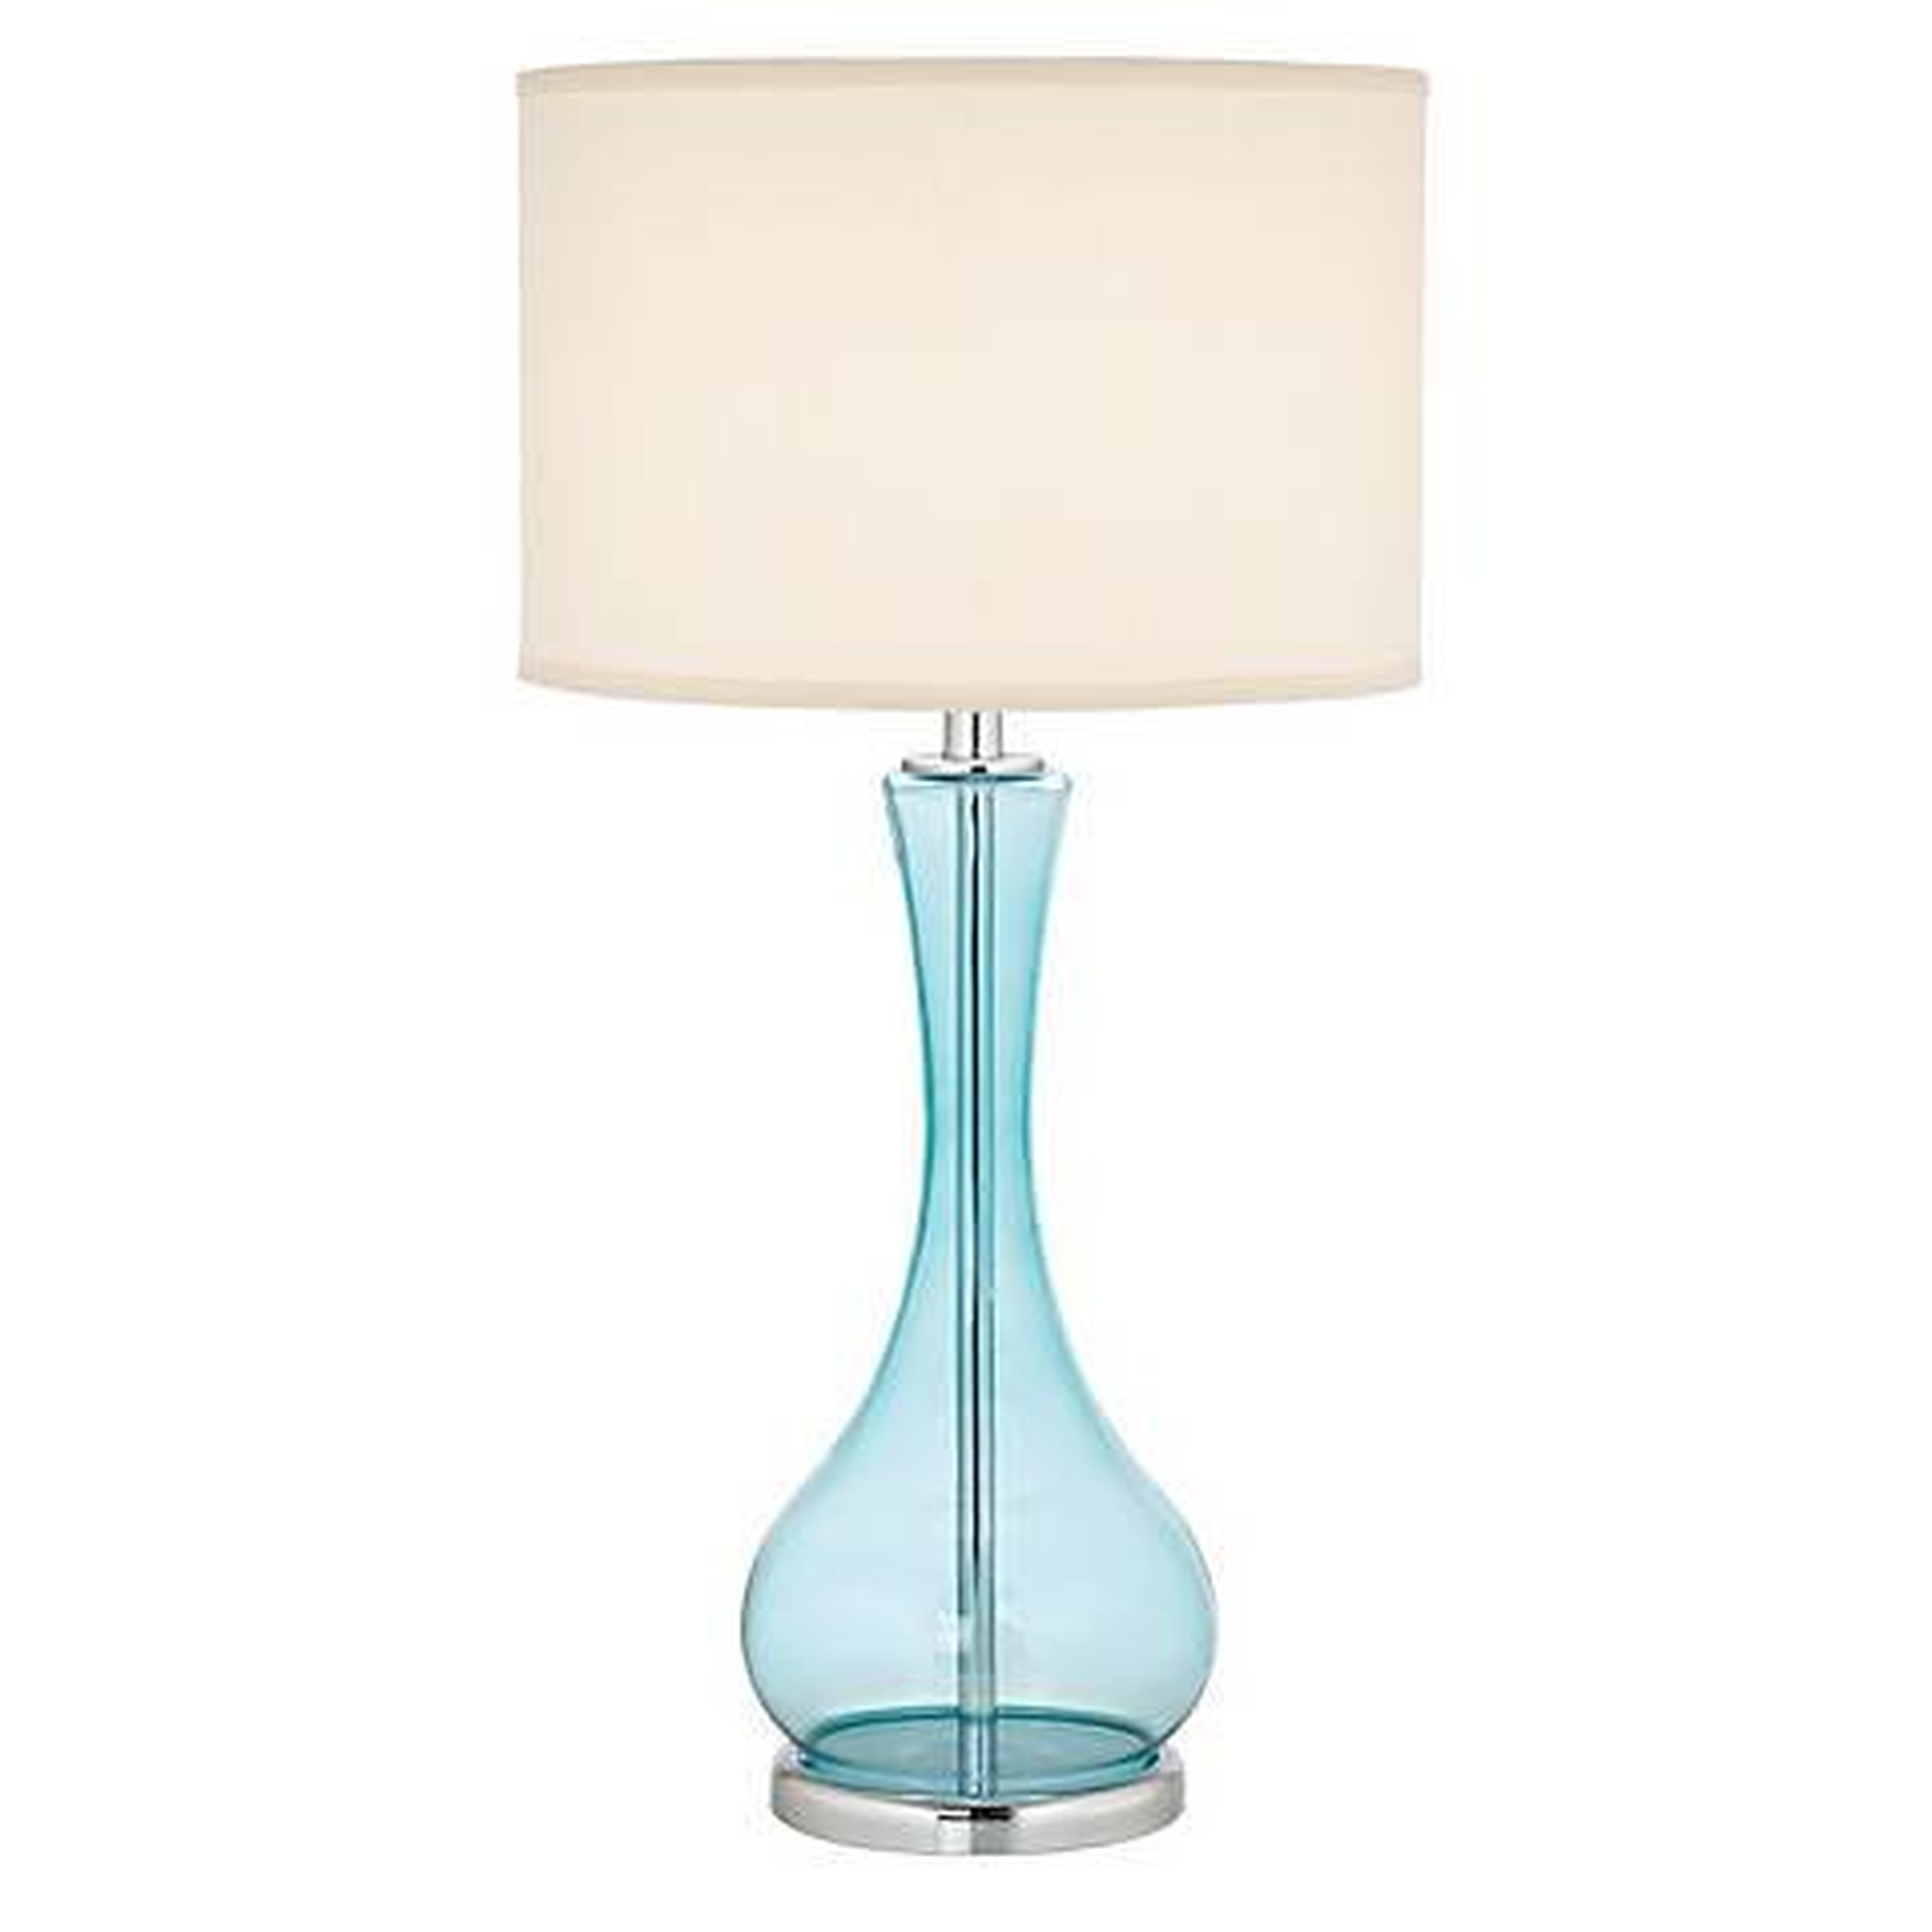 Blue Martini Glass Table Lamp - Lamps Plus